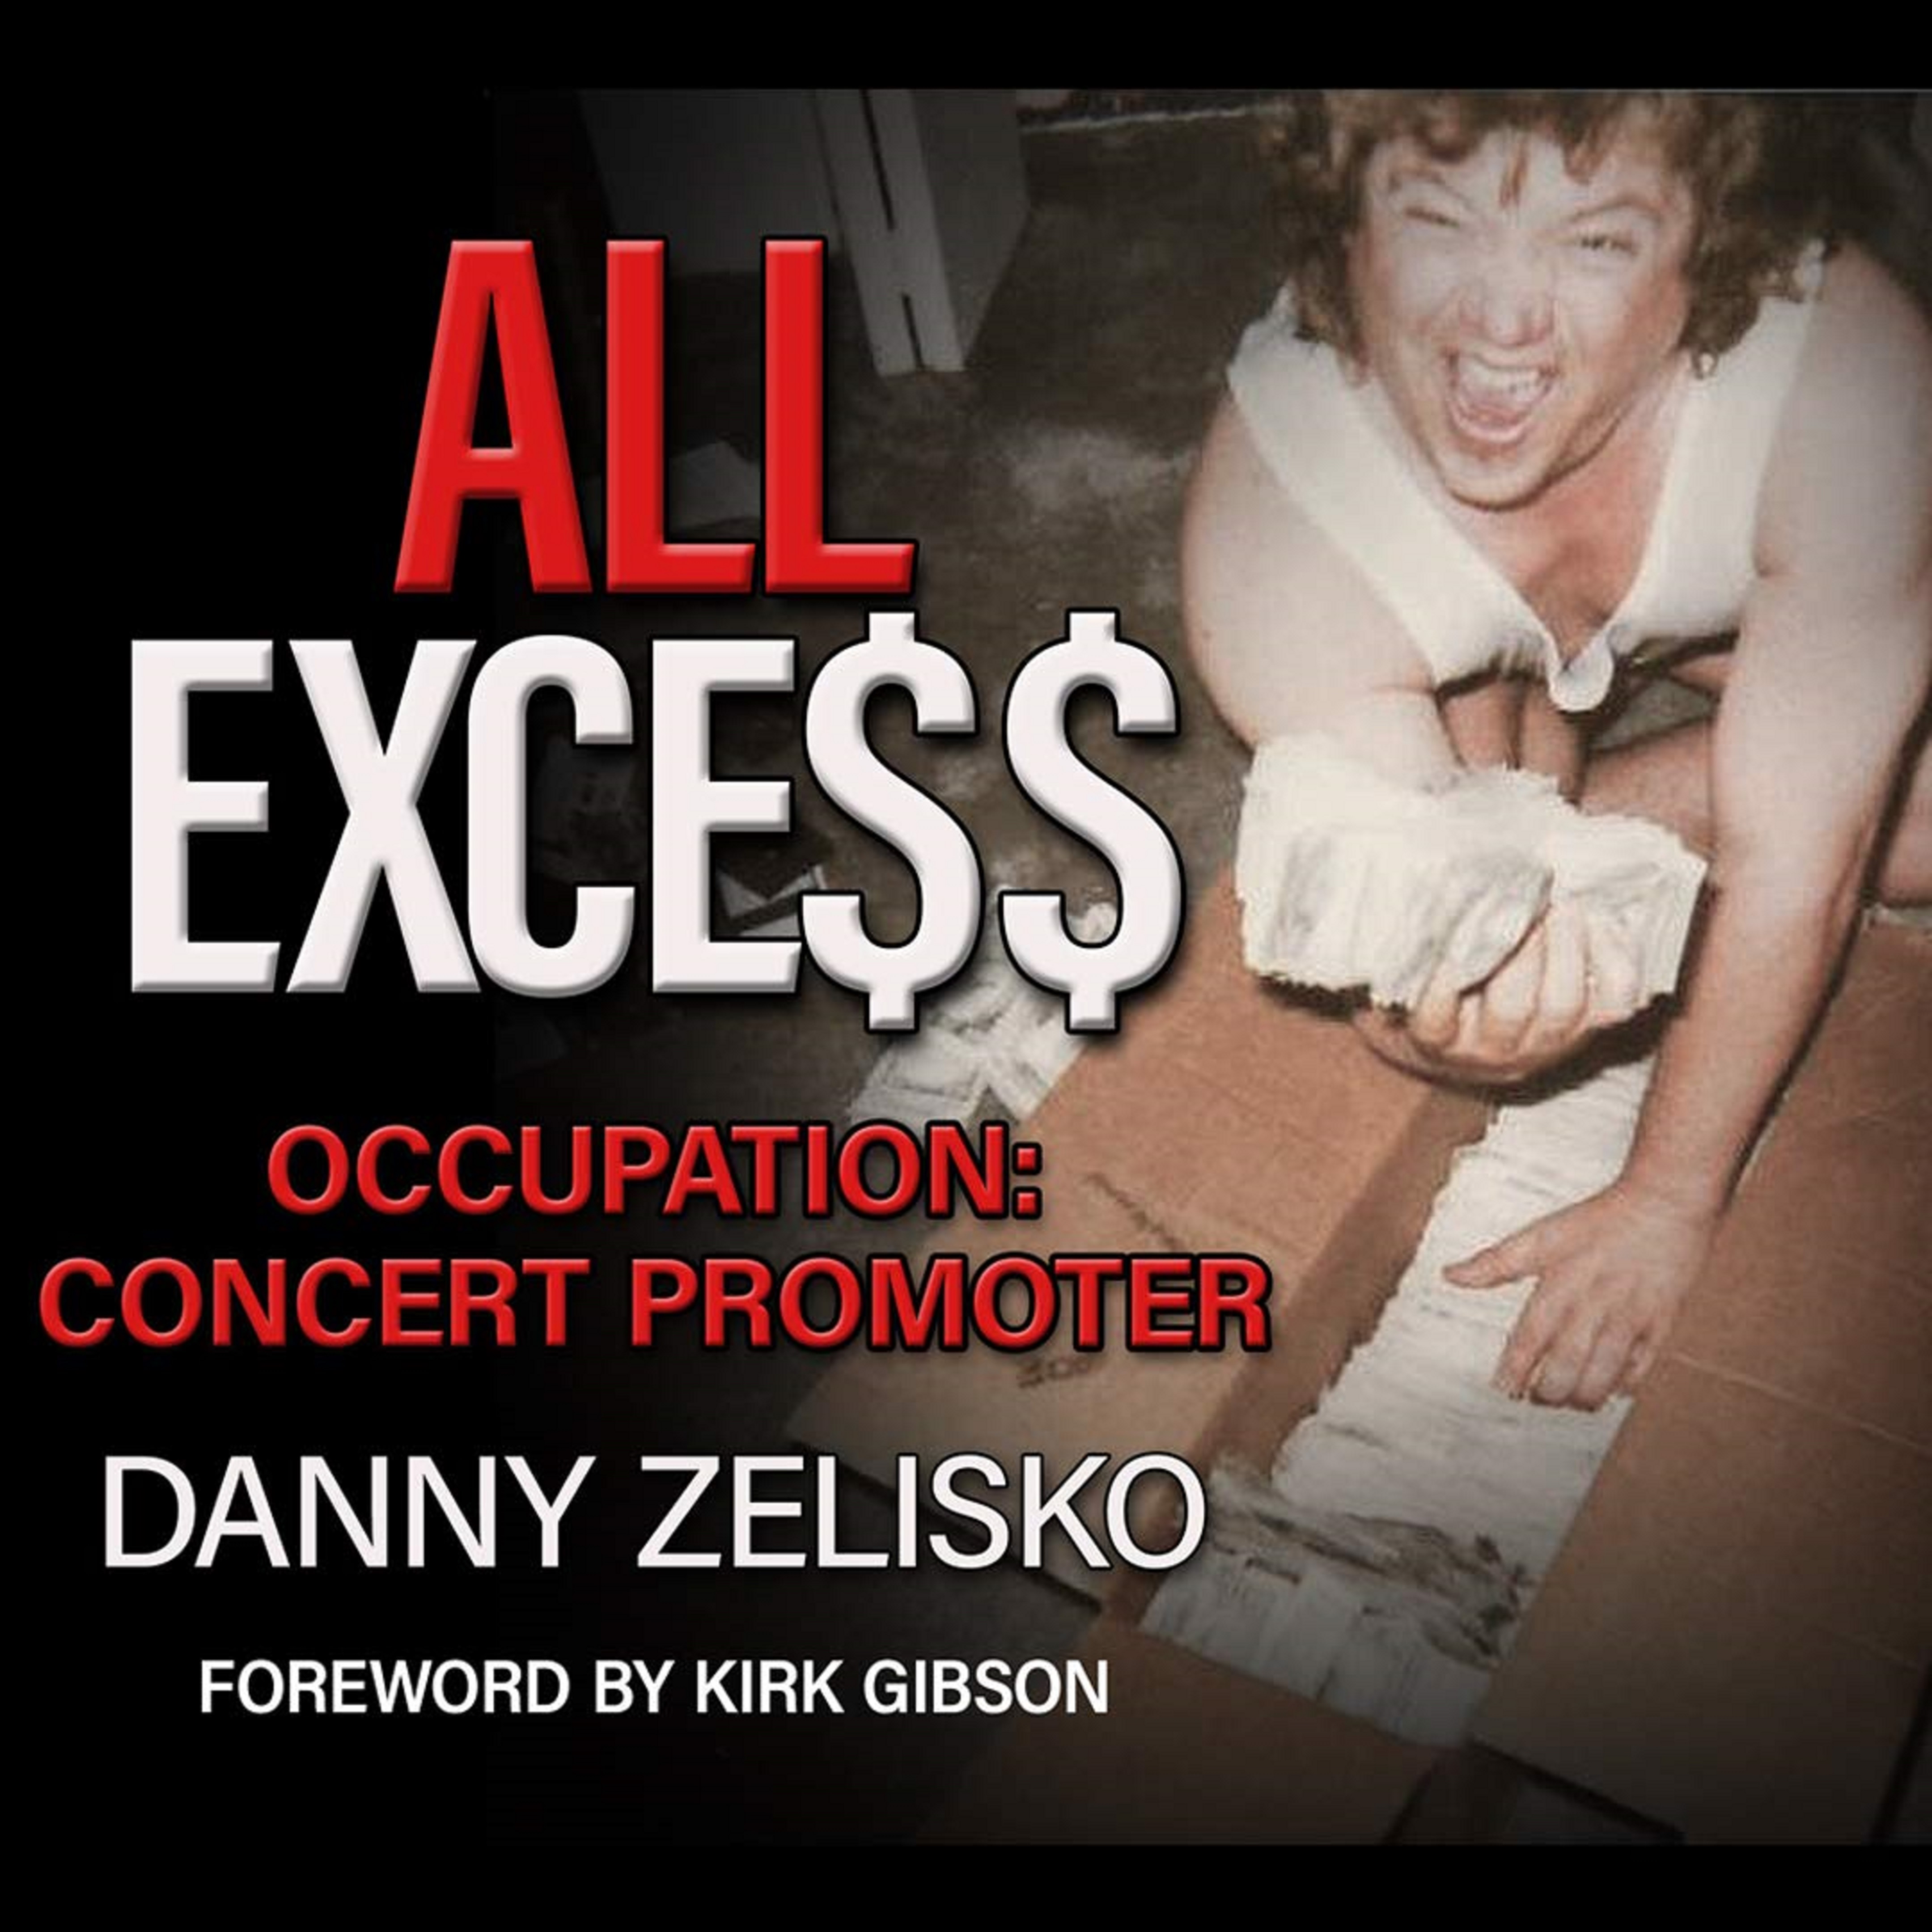 Danny Zelisko Recounts His Career in His New Book, ALL EXCE$$ Occupation: Concert Promoter